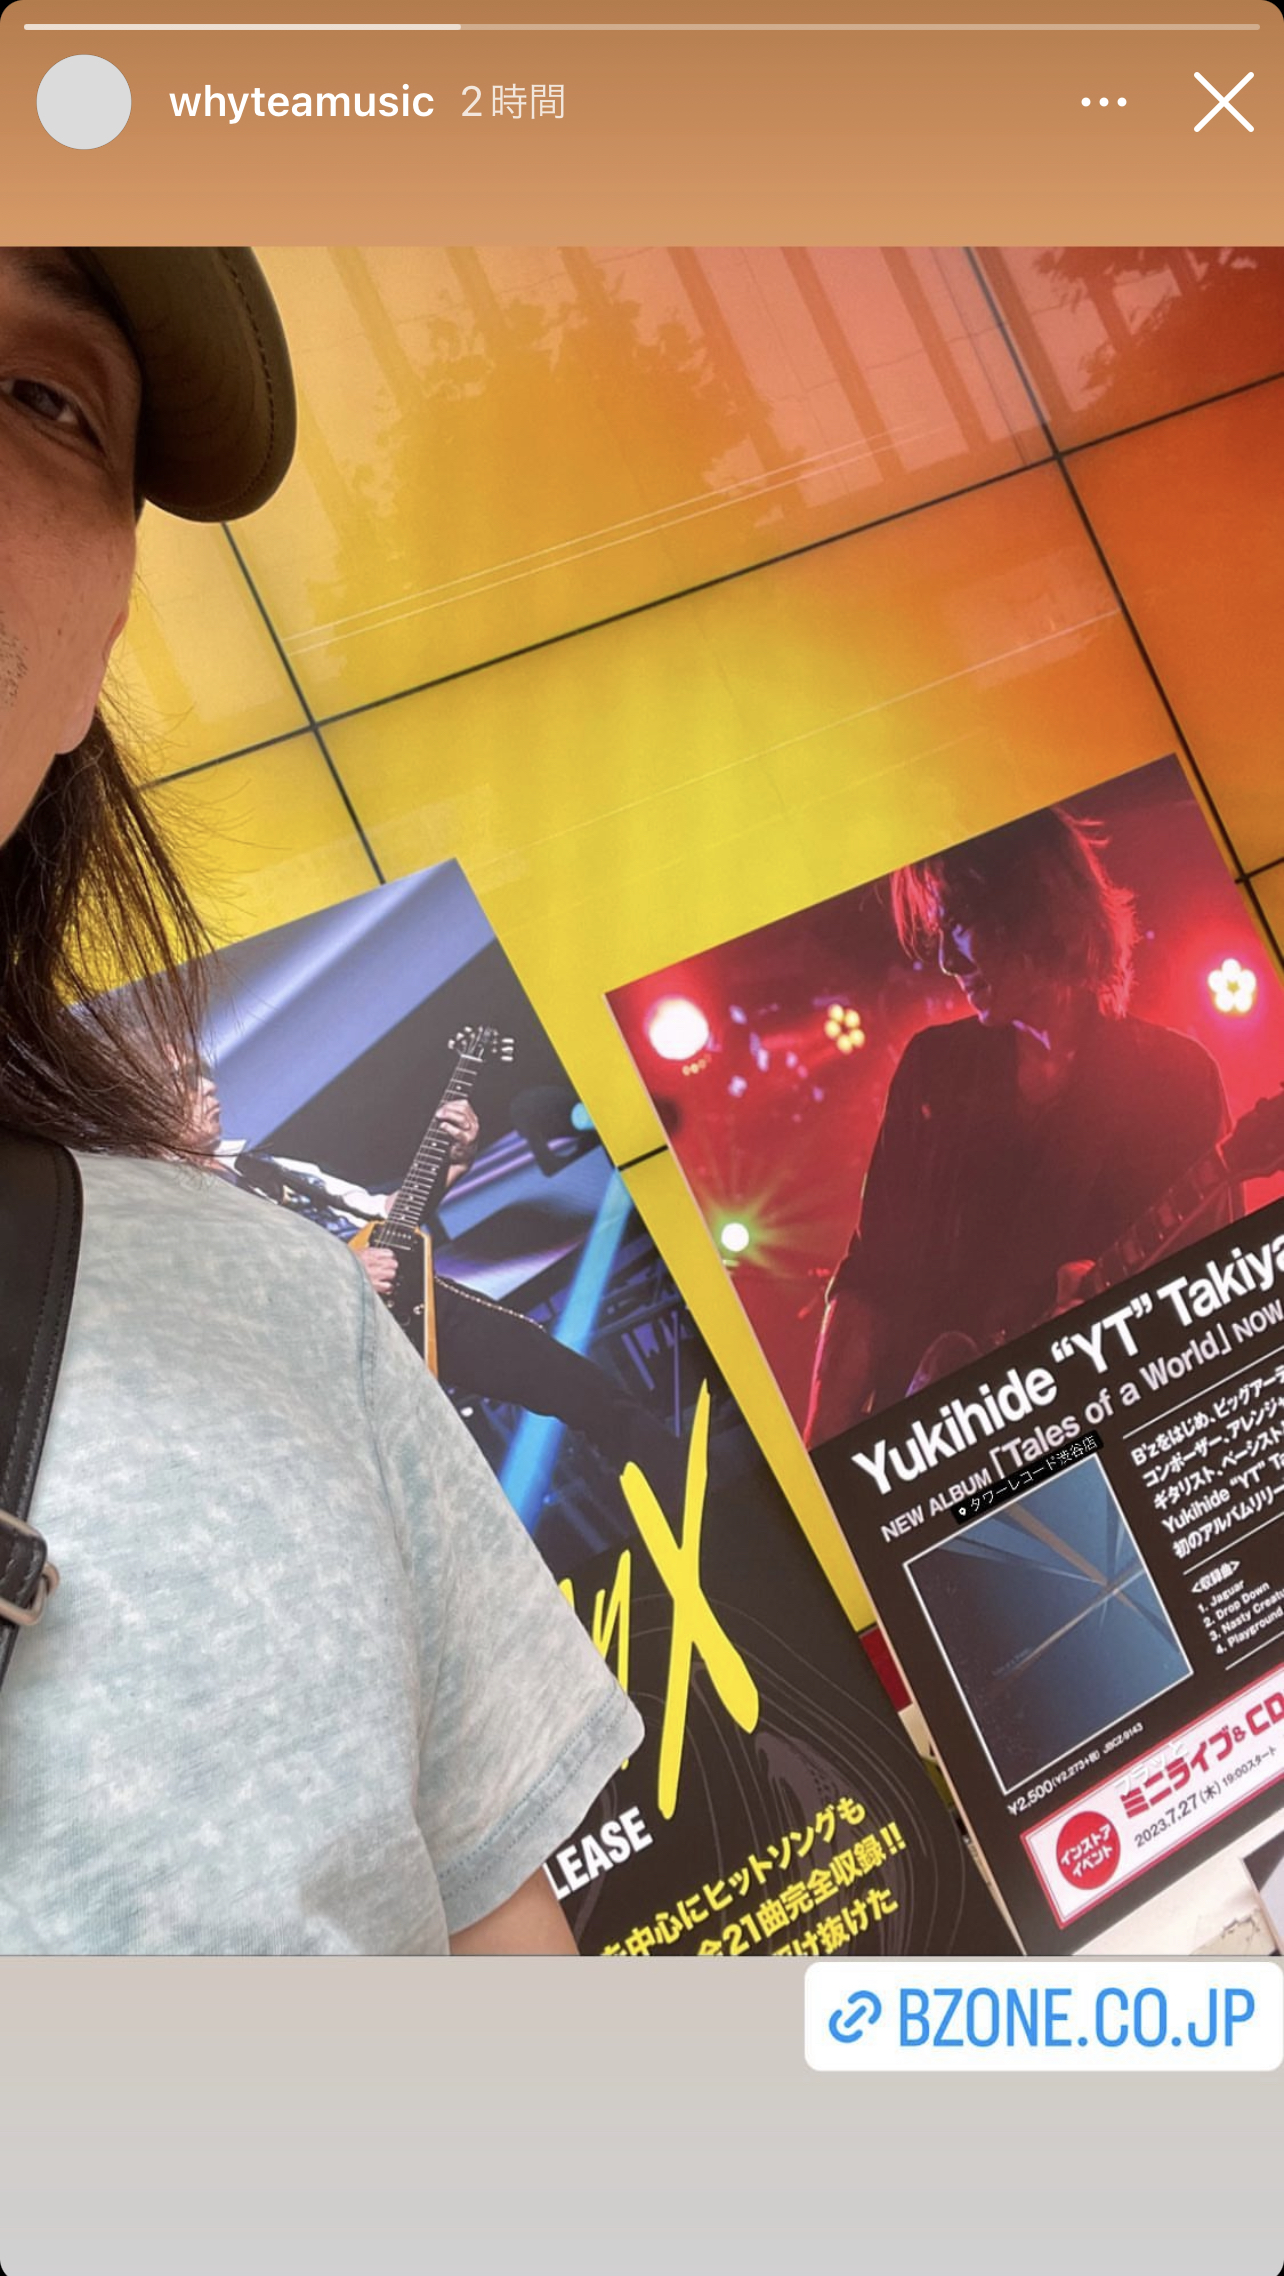 YTがB'zの映像作品『Highway X』とソロアルバム『Tales of a World』のリリース日に投稿したタワレコ渋谷店での写真